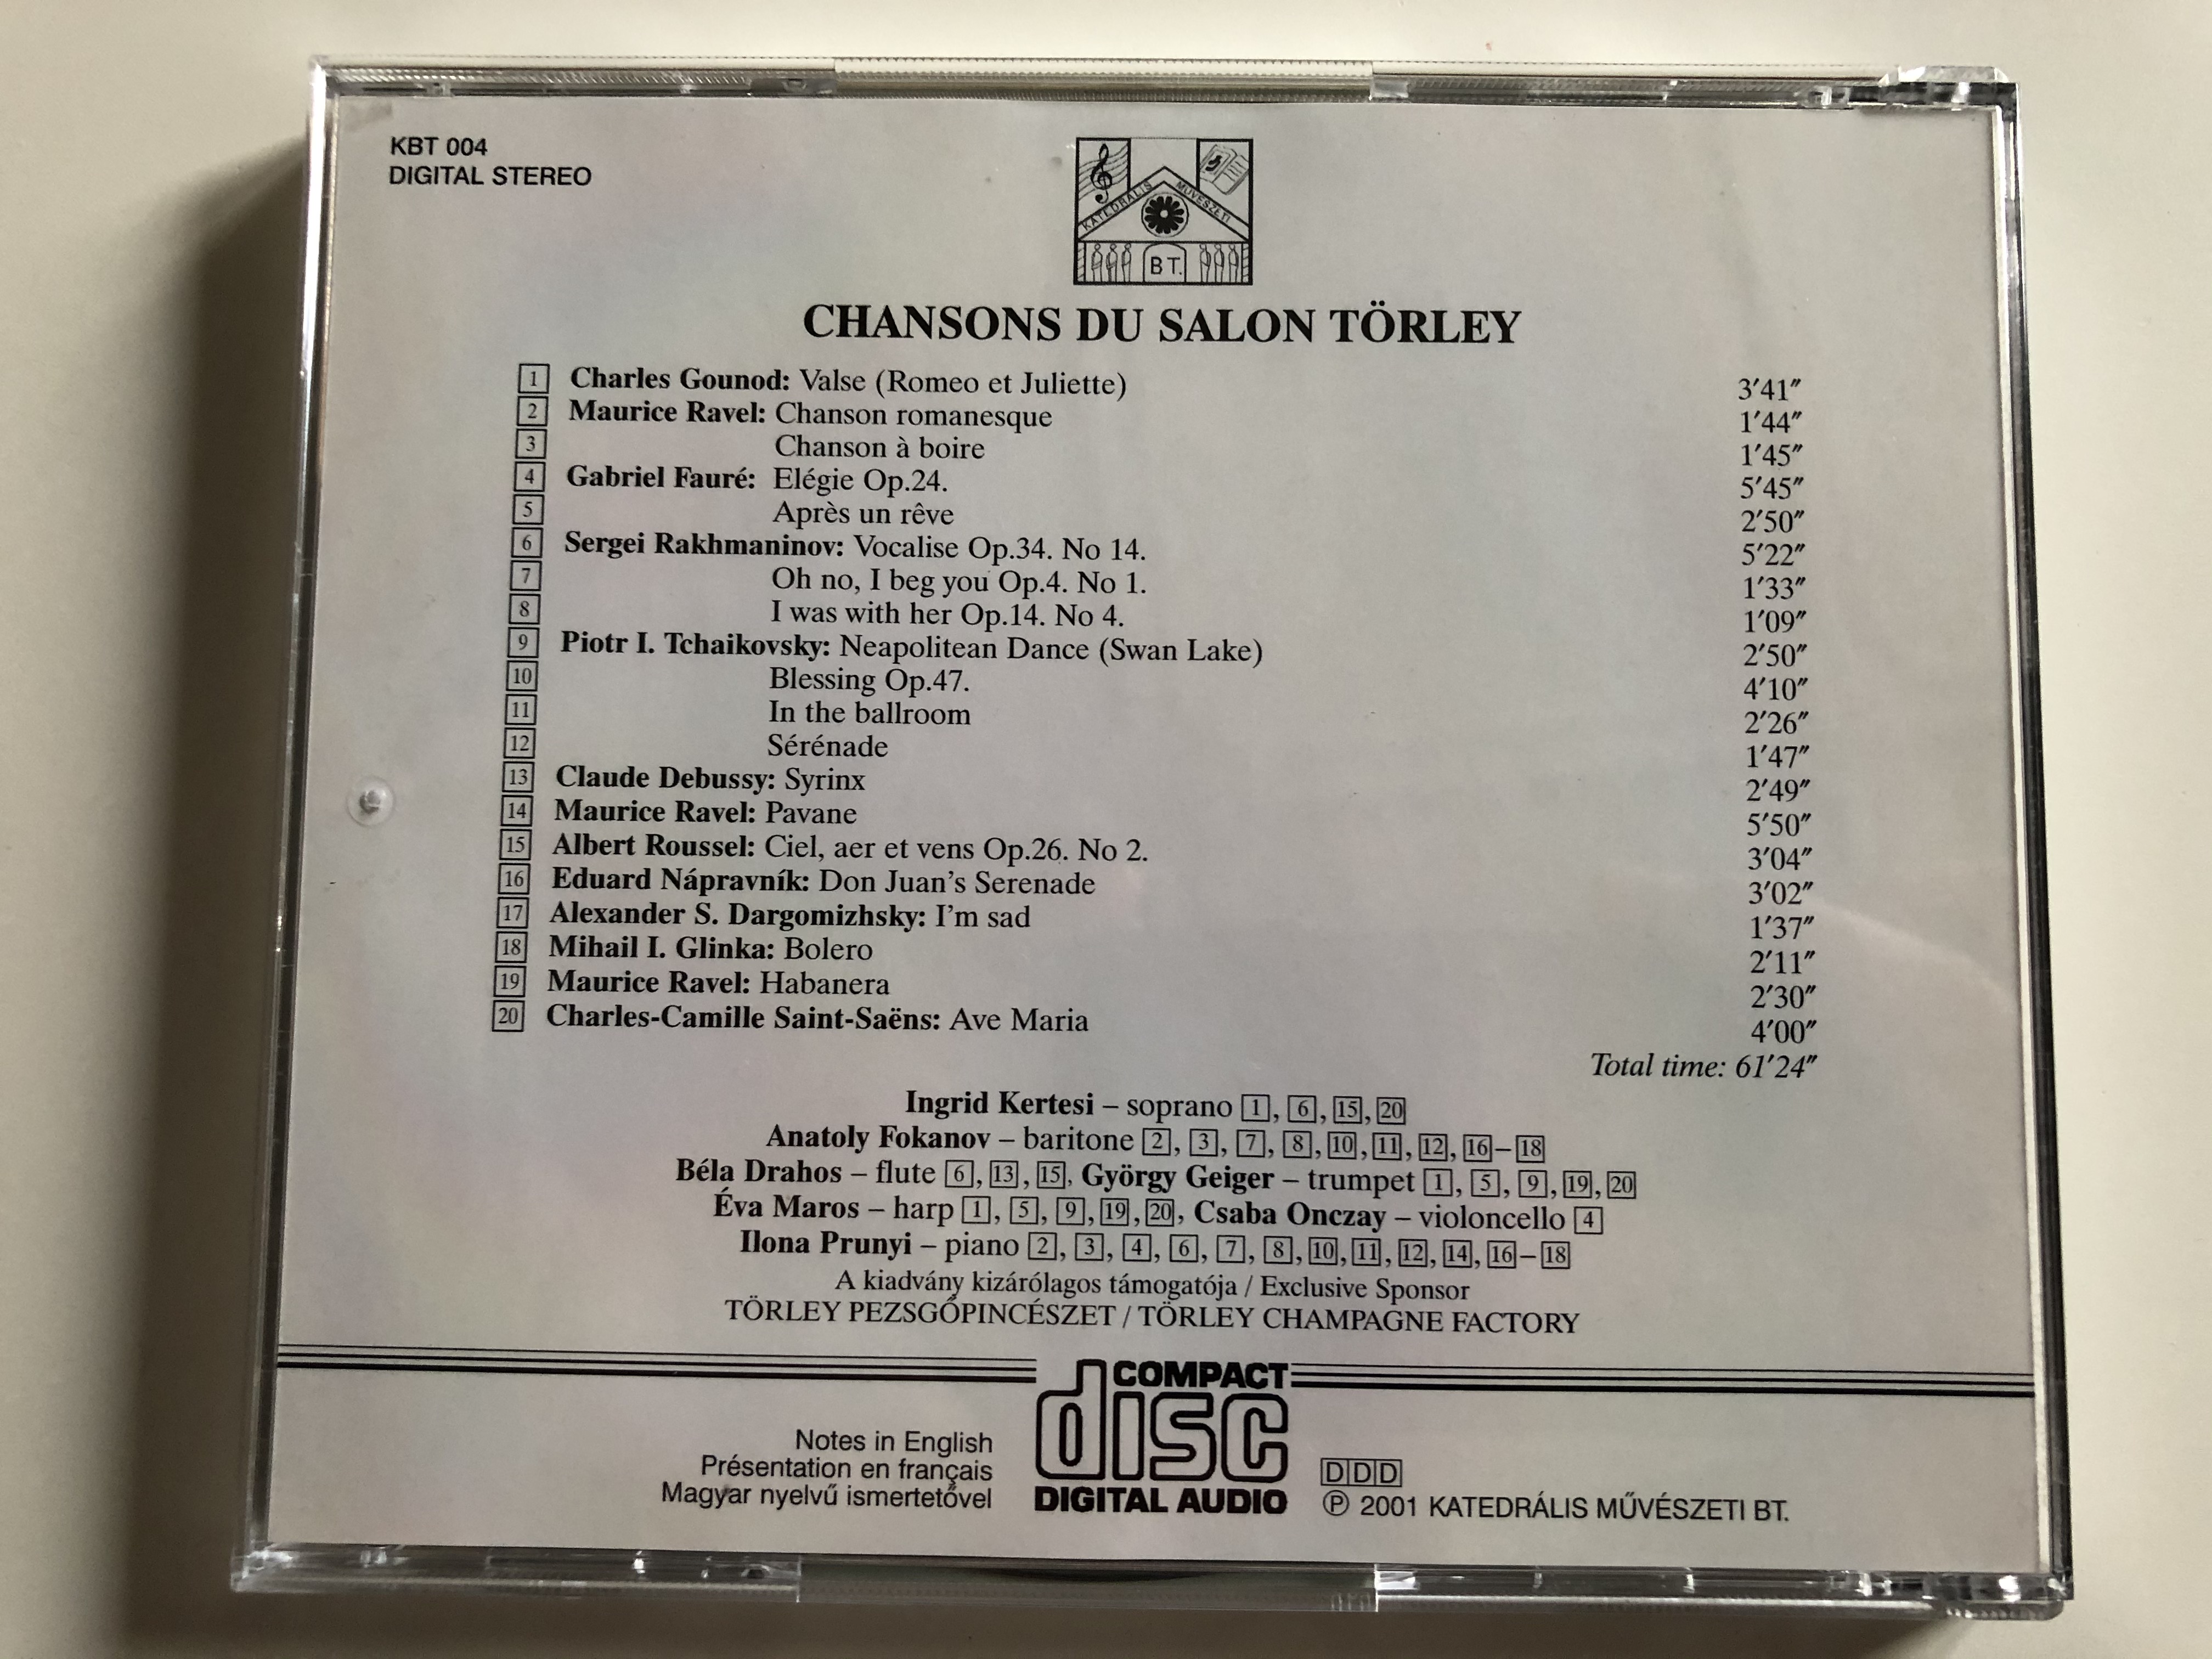 chansons-du-salon-torley-katedralis-muveszeti-bt.-audio-cd-2001-stereo-kbt-004-8-.jpg